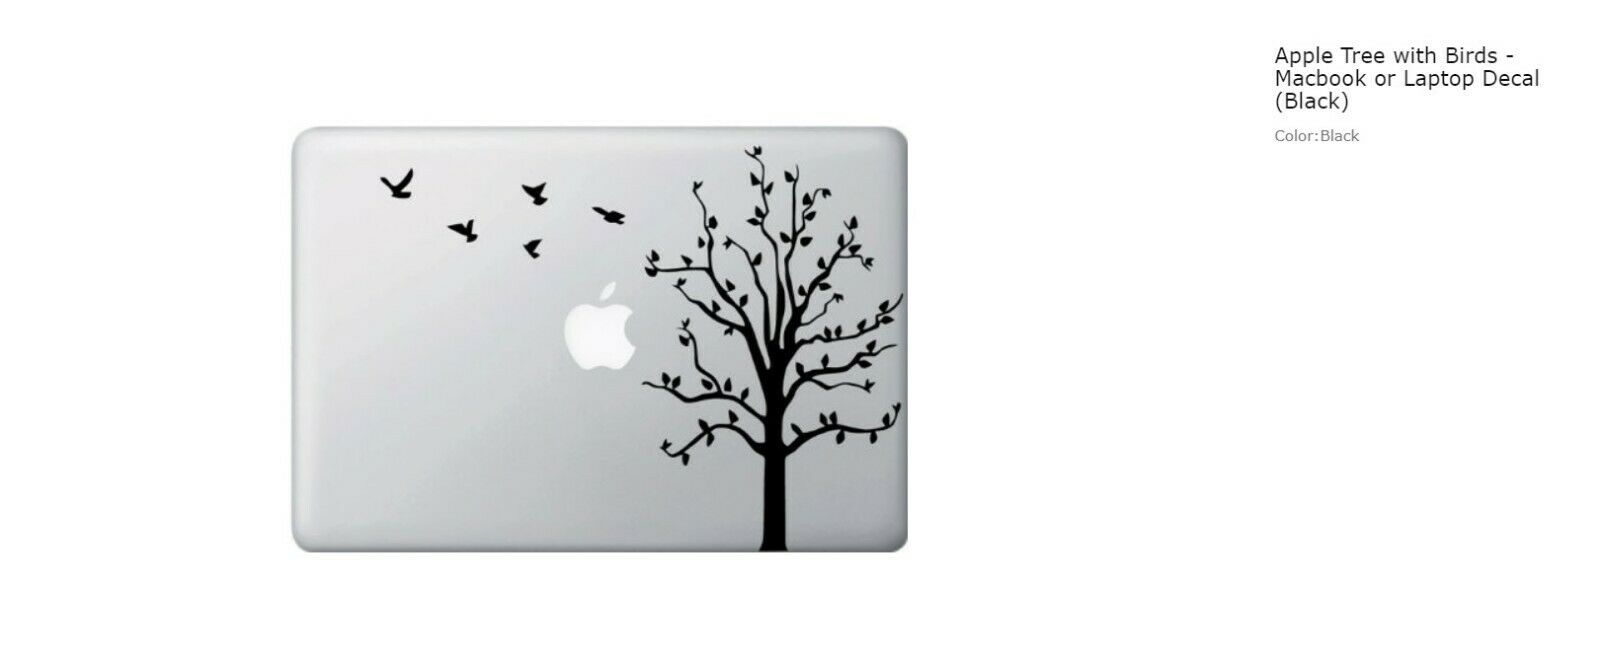 Tree with Birds Apple Macbook Vinyl Sticker Skin Decal Cover